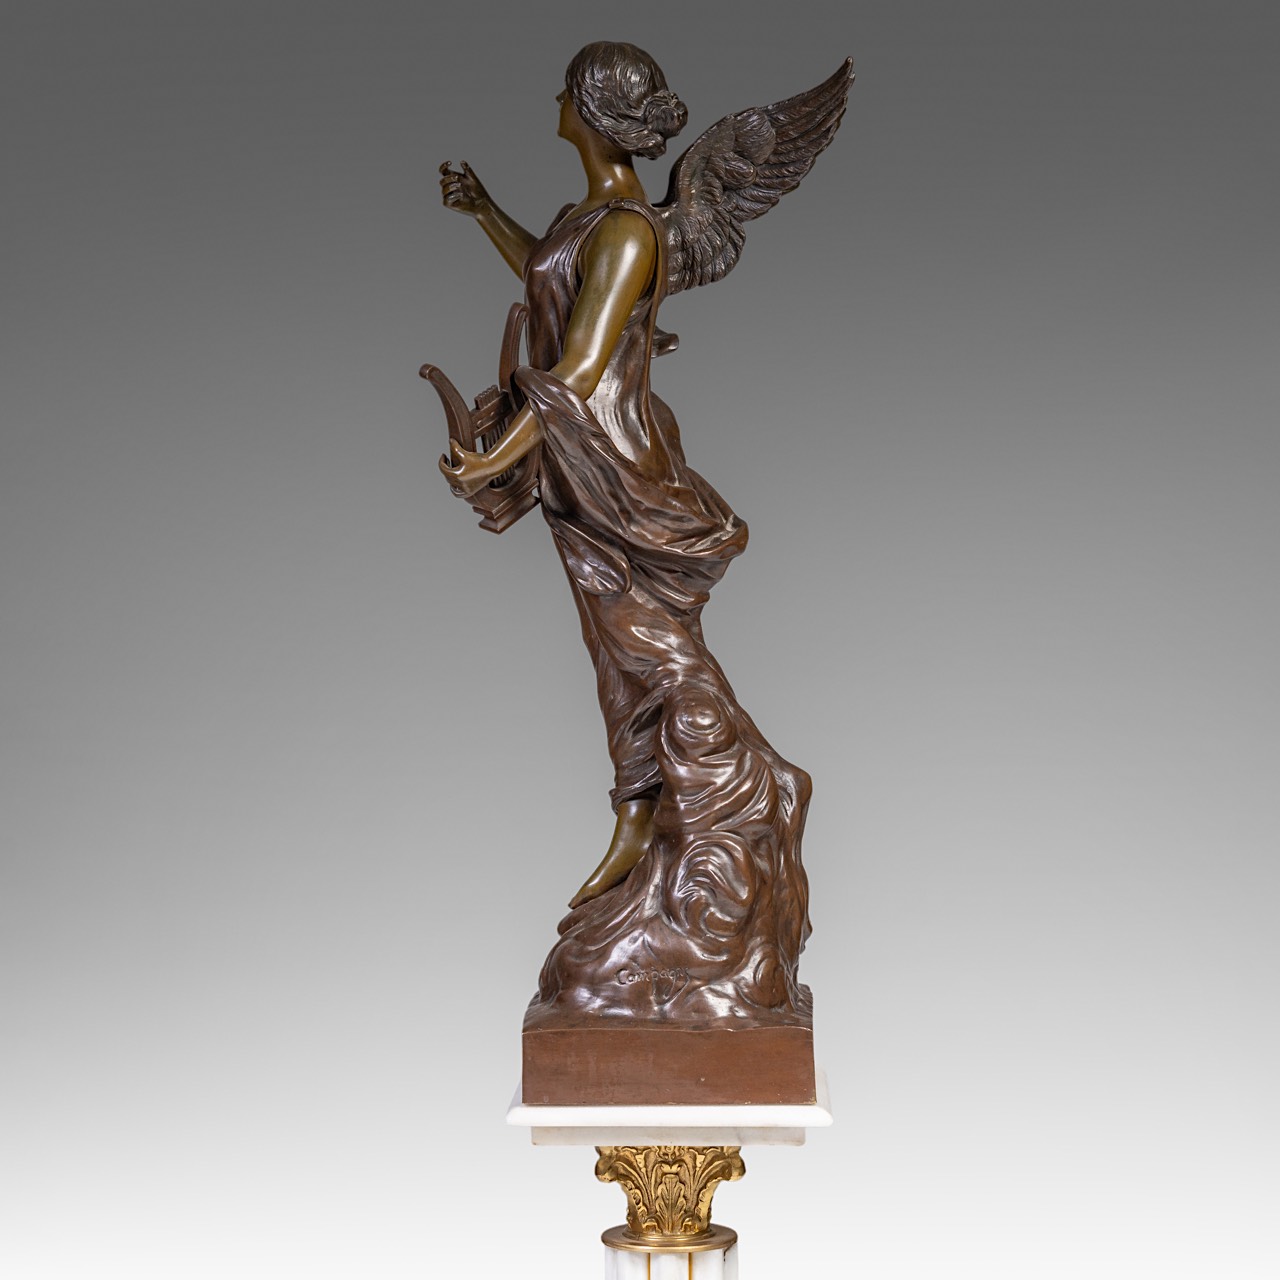 Pierre Etienne Daniel Campagne (1851-1914), 'L'inspiration', patinated bronze, H 85 cm - Image 21 of 26